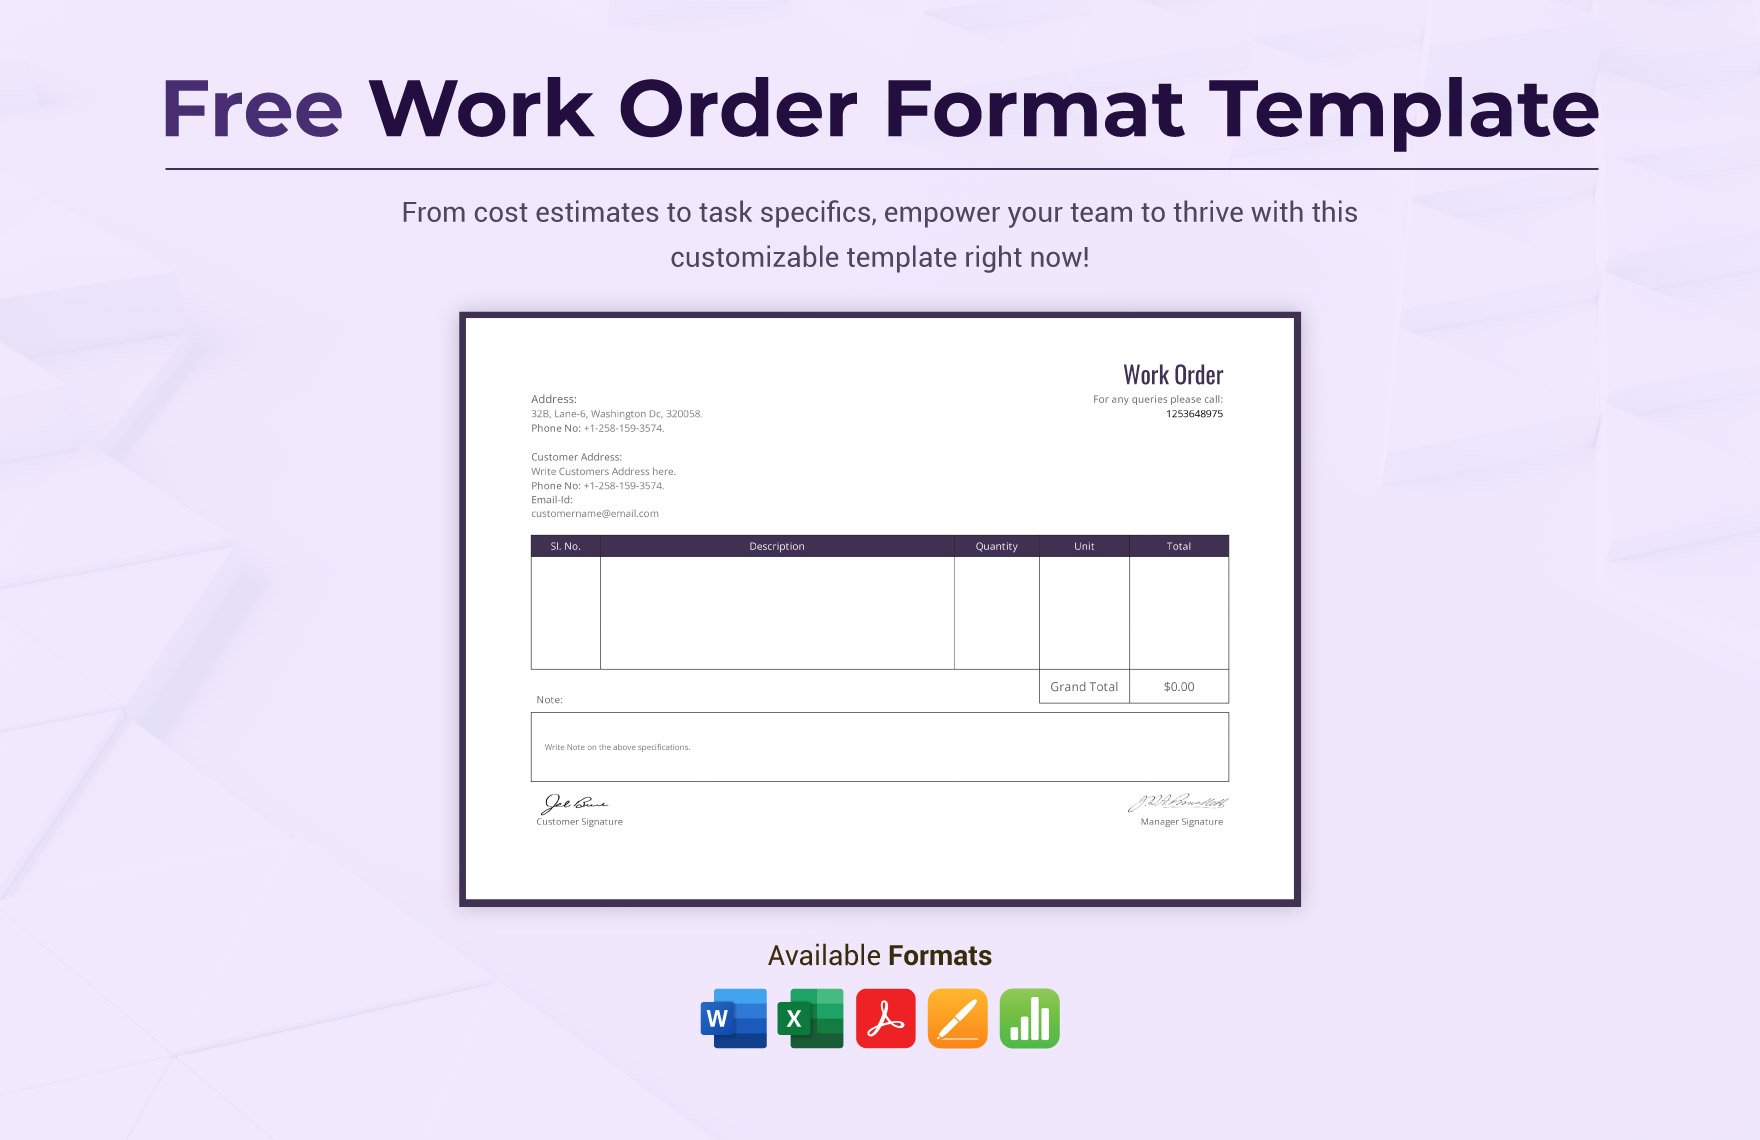 Work Order Format Template